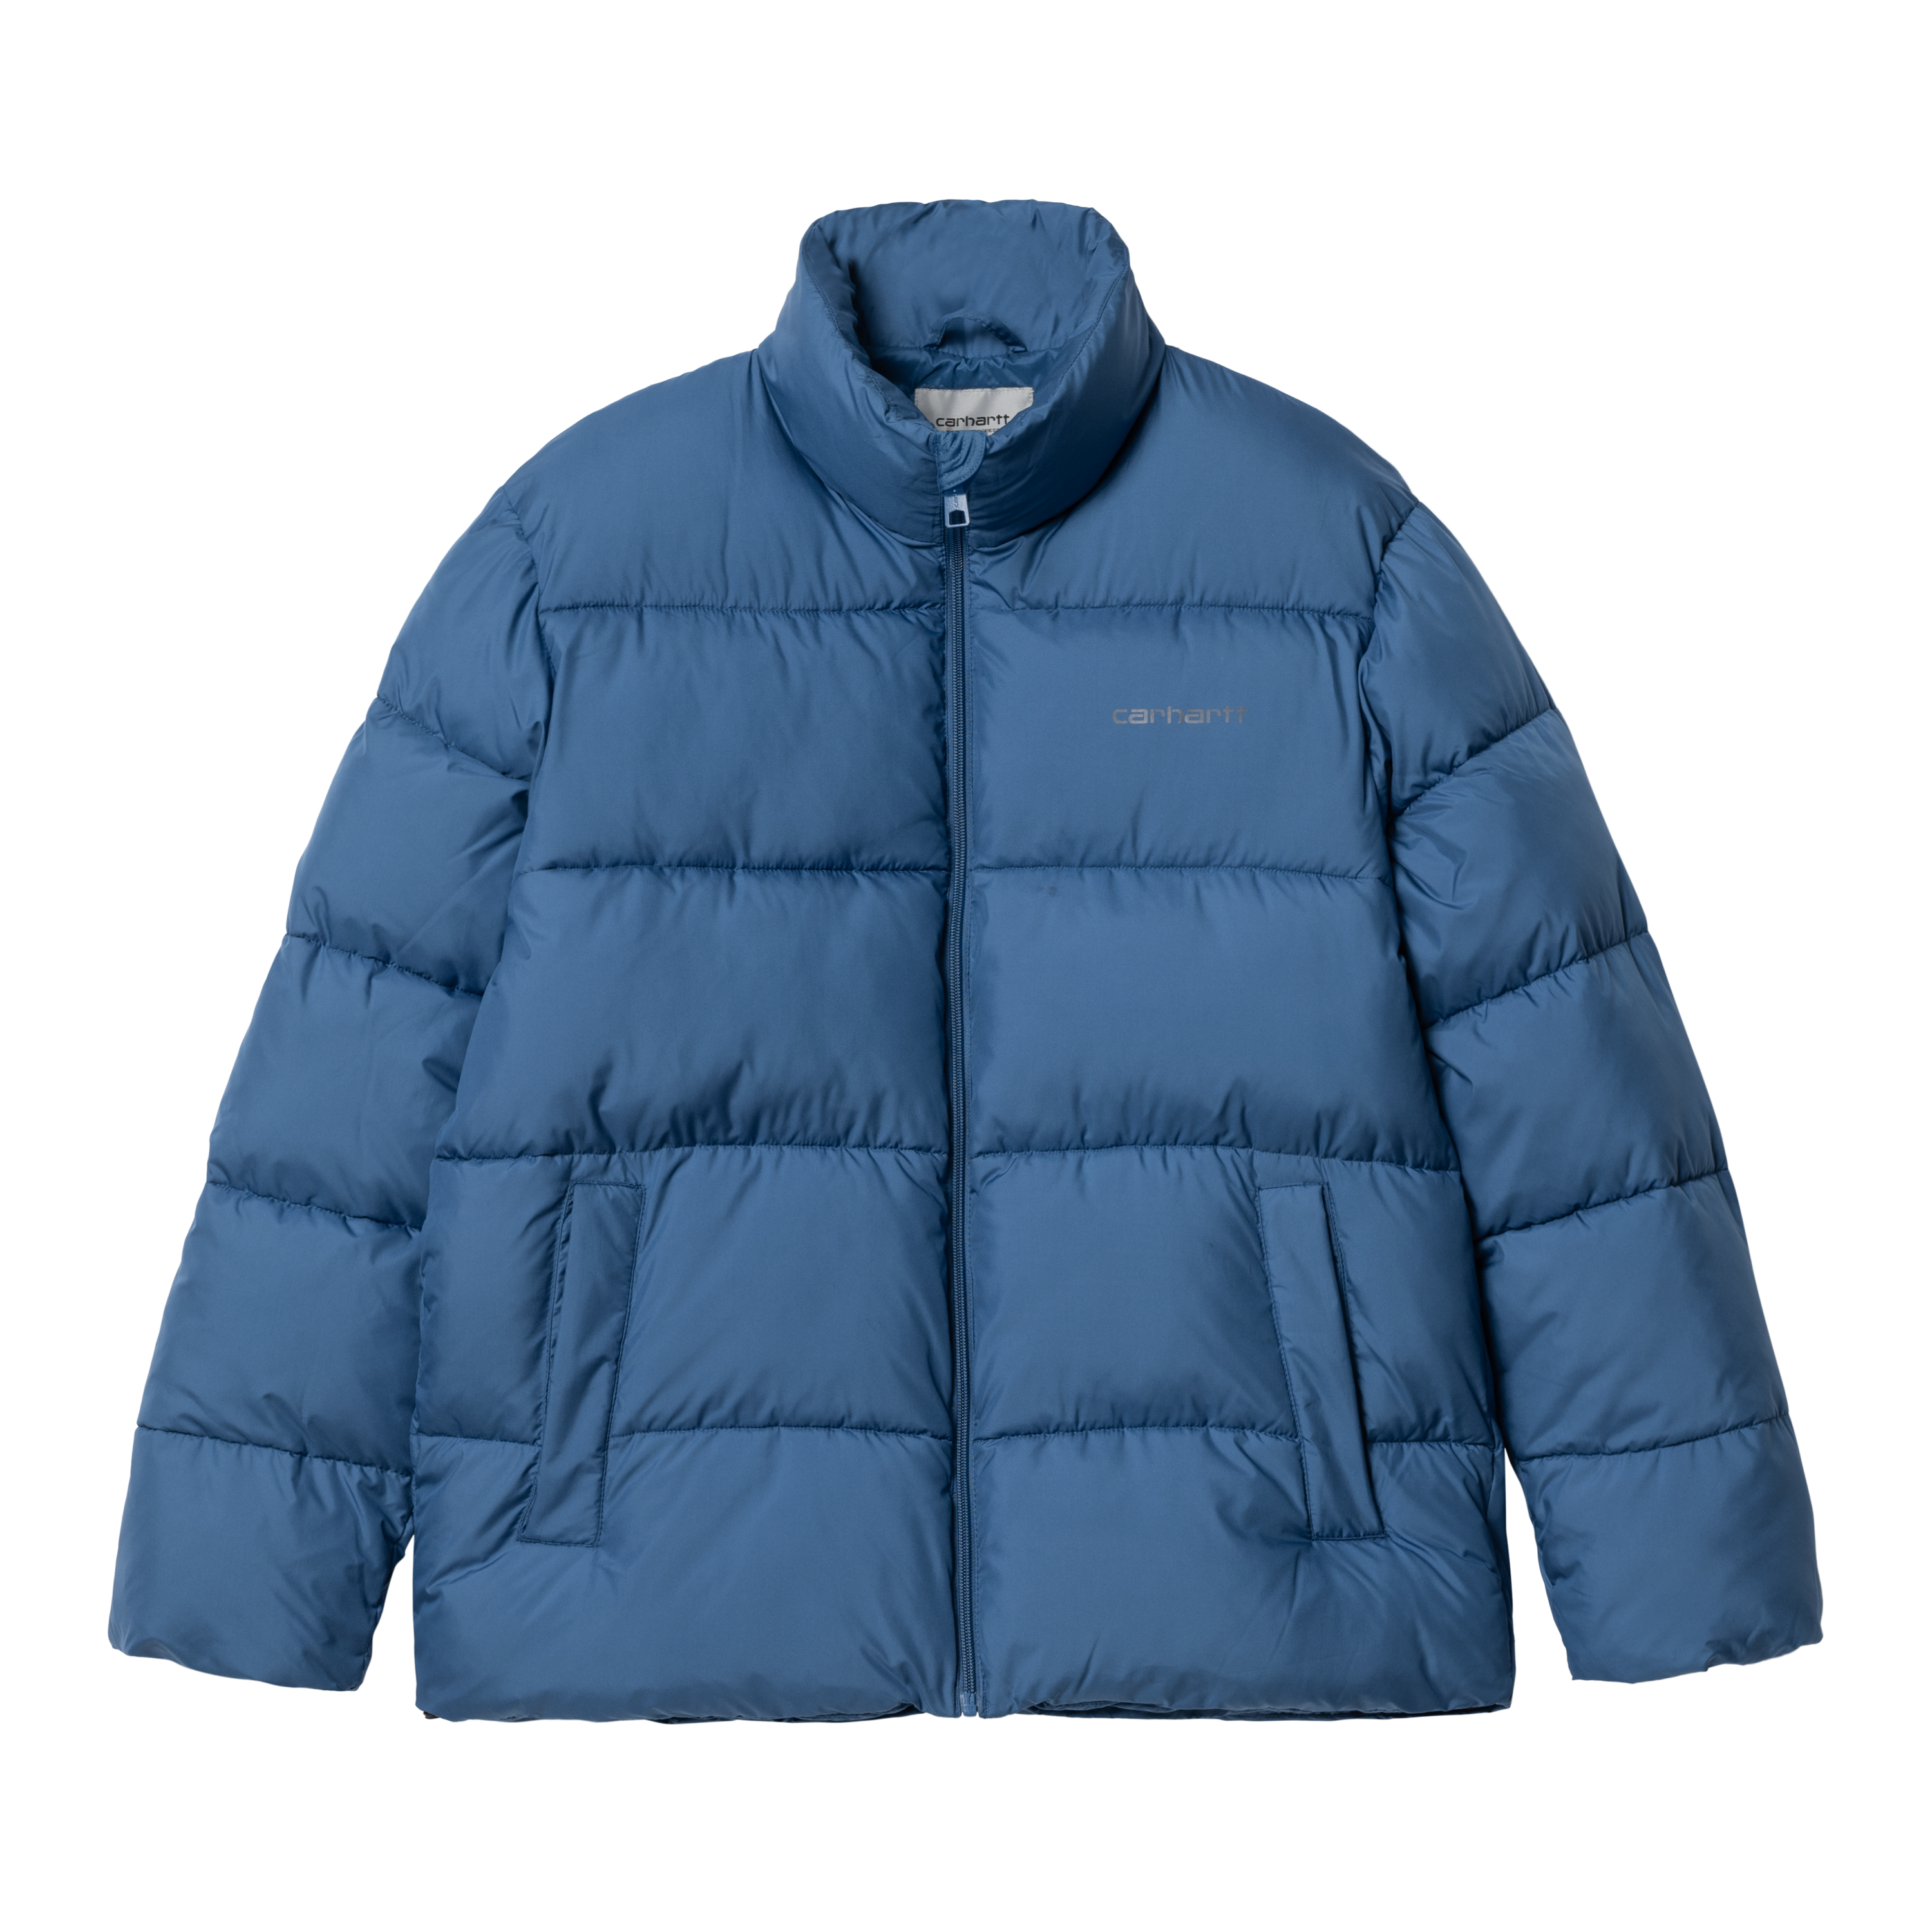 Carhartt WIP Springfield Jacket in Blue